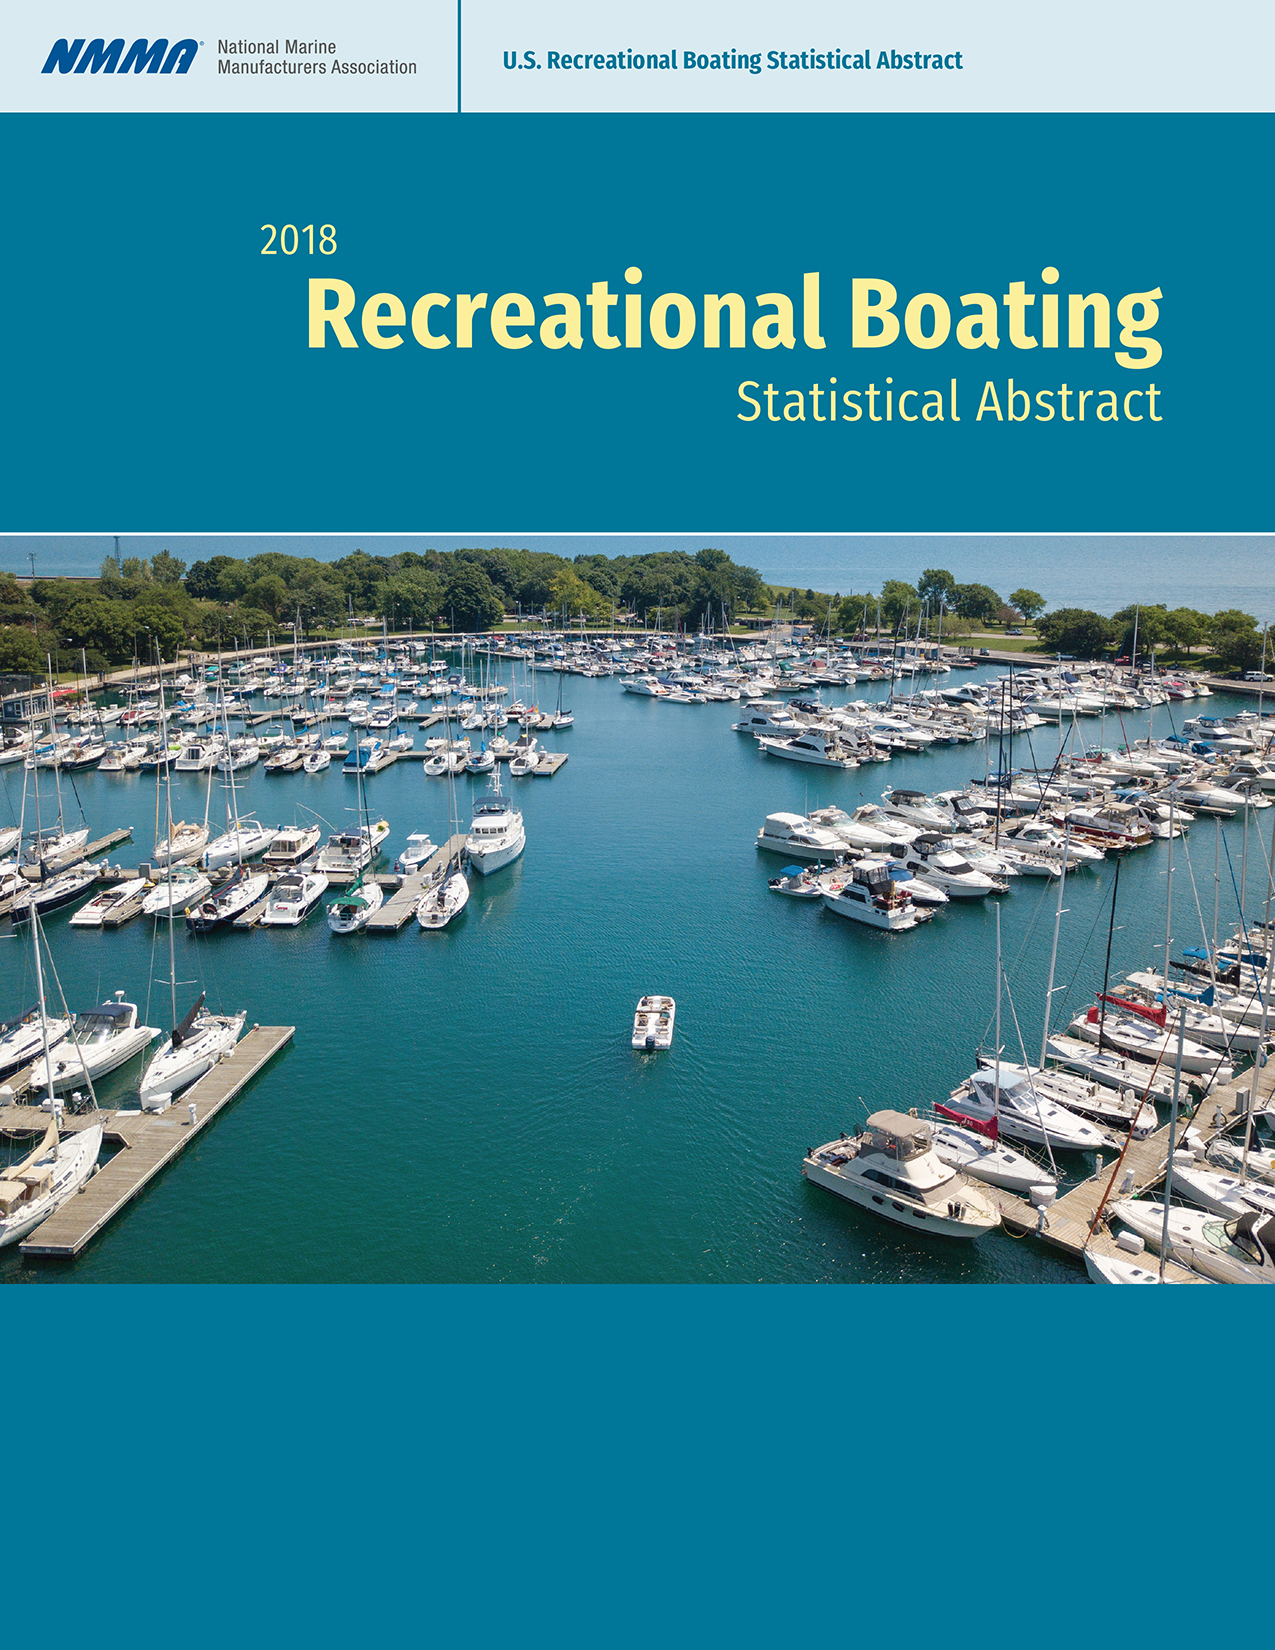 2021 Total Boat Registrations